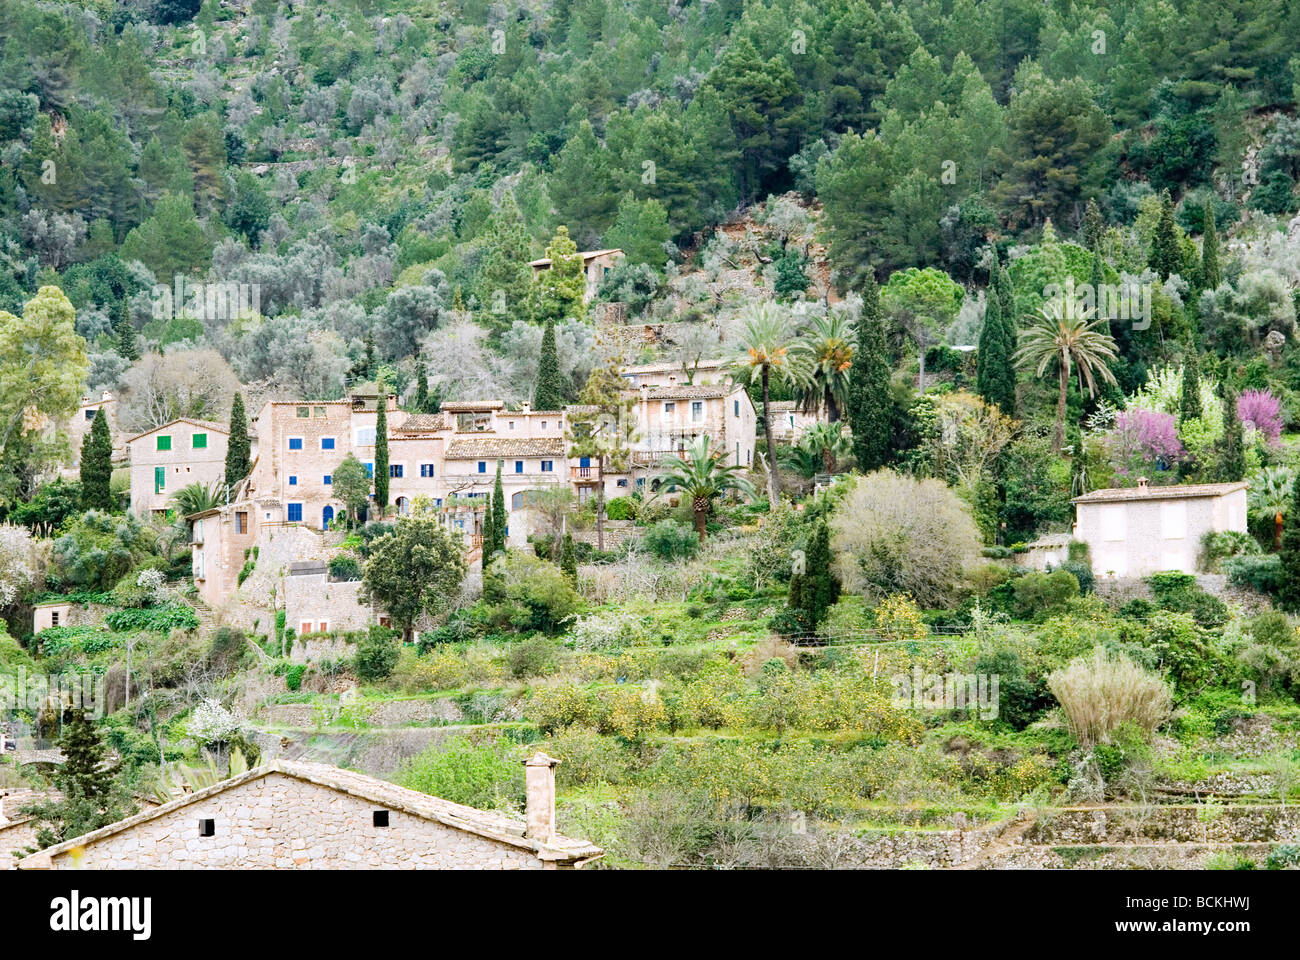 The village Deia on the balearic island Mallorca, Spain. Stock Photo